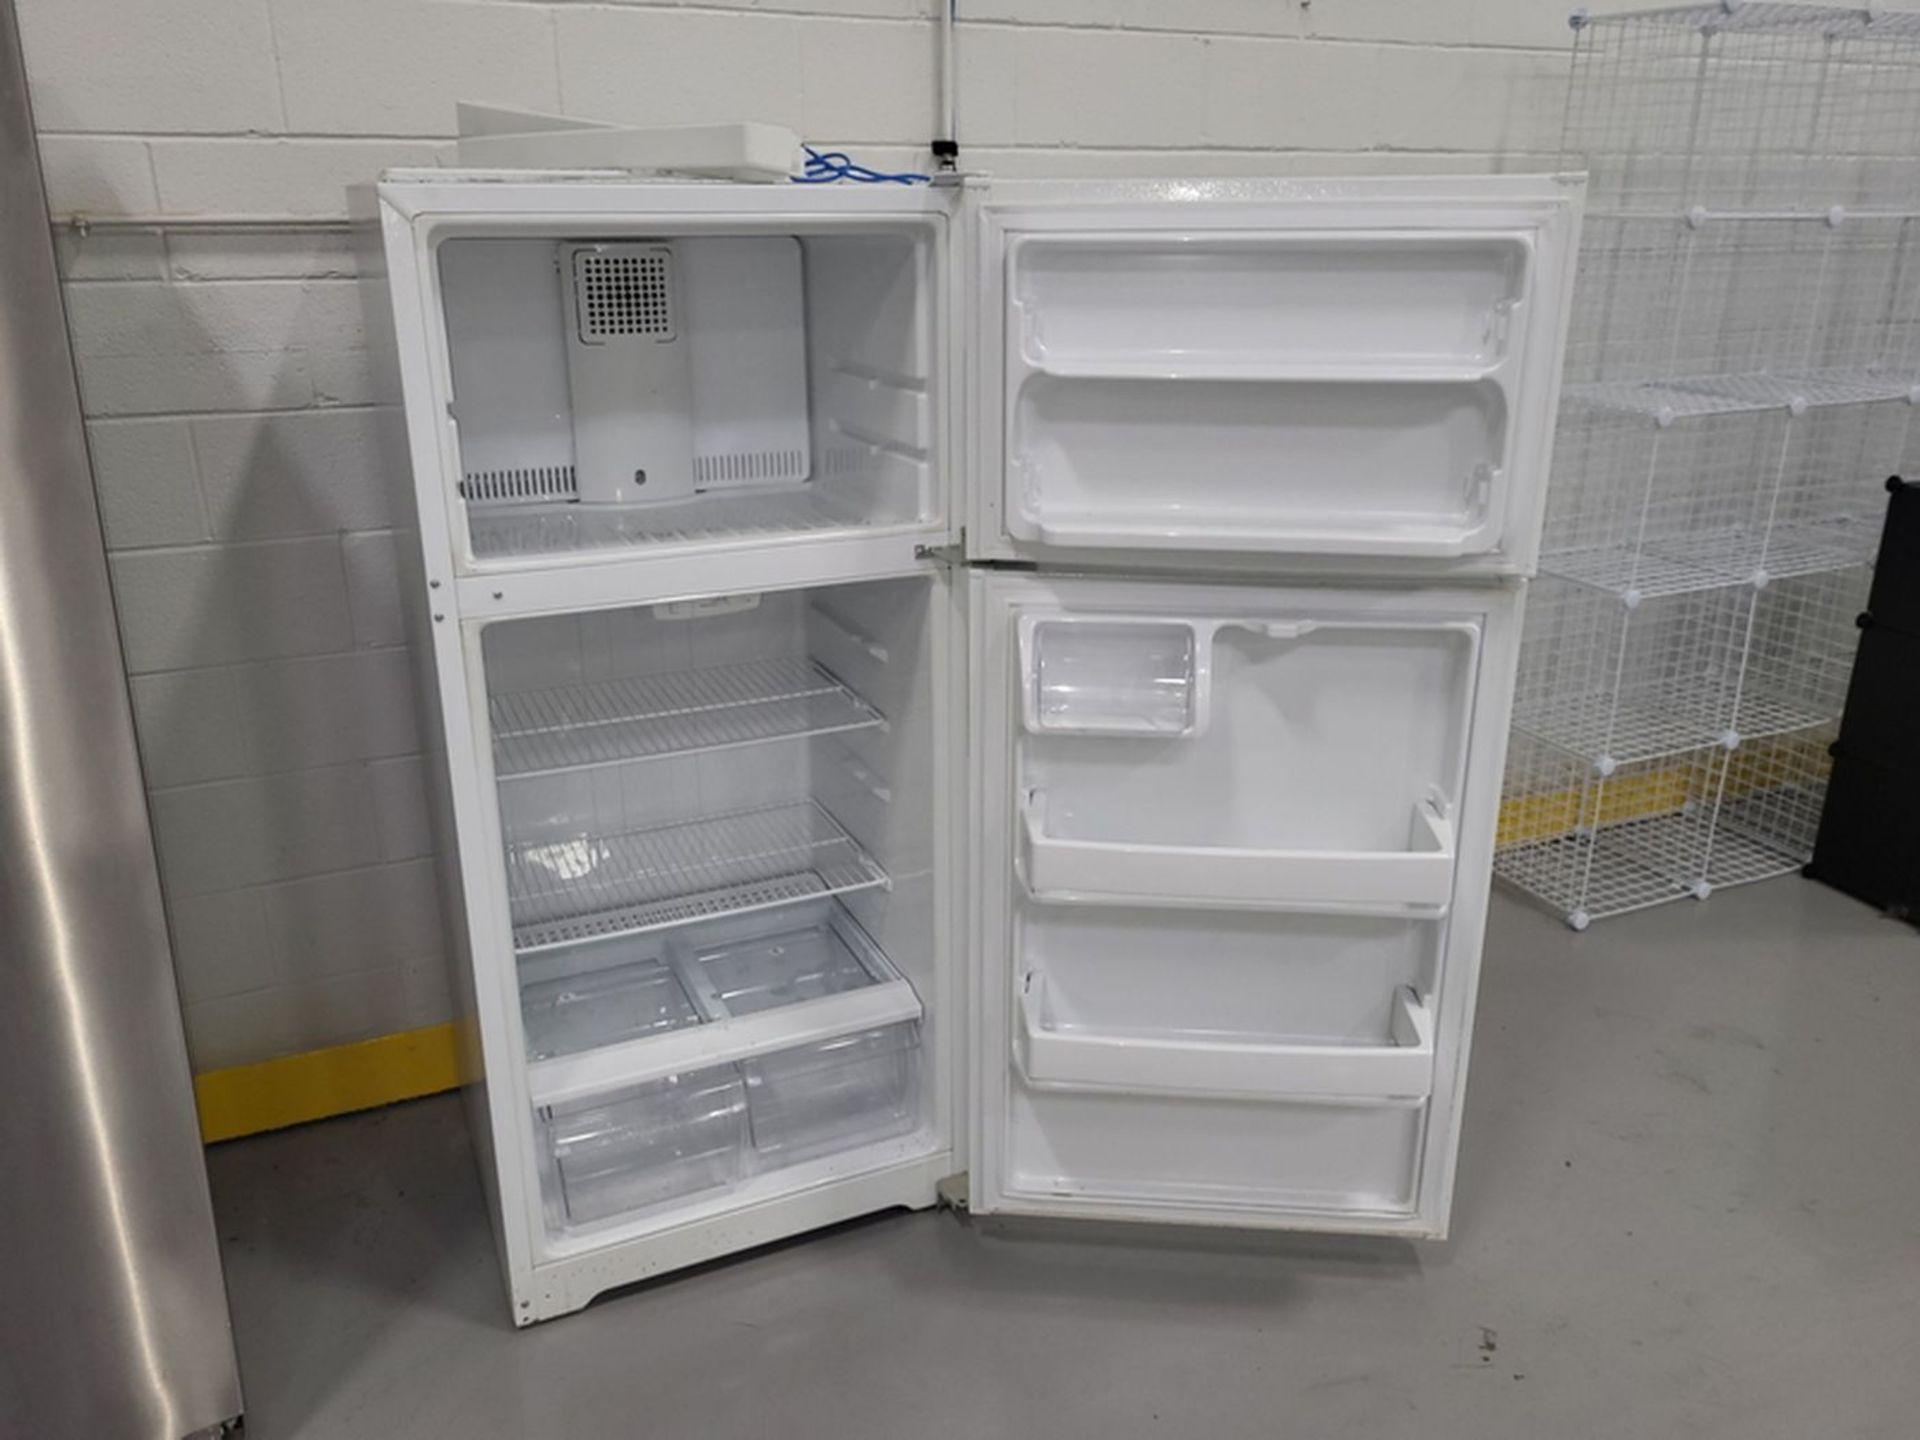 Hotpoint Shop Refrigerator/Freezer, S/N: DM753105; R-134a Refrigerant, 120-Volt - Image 2 of 2